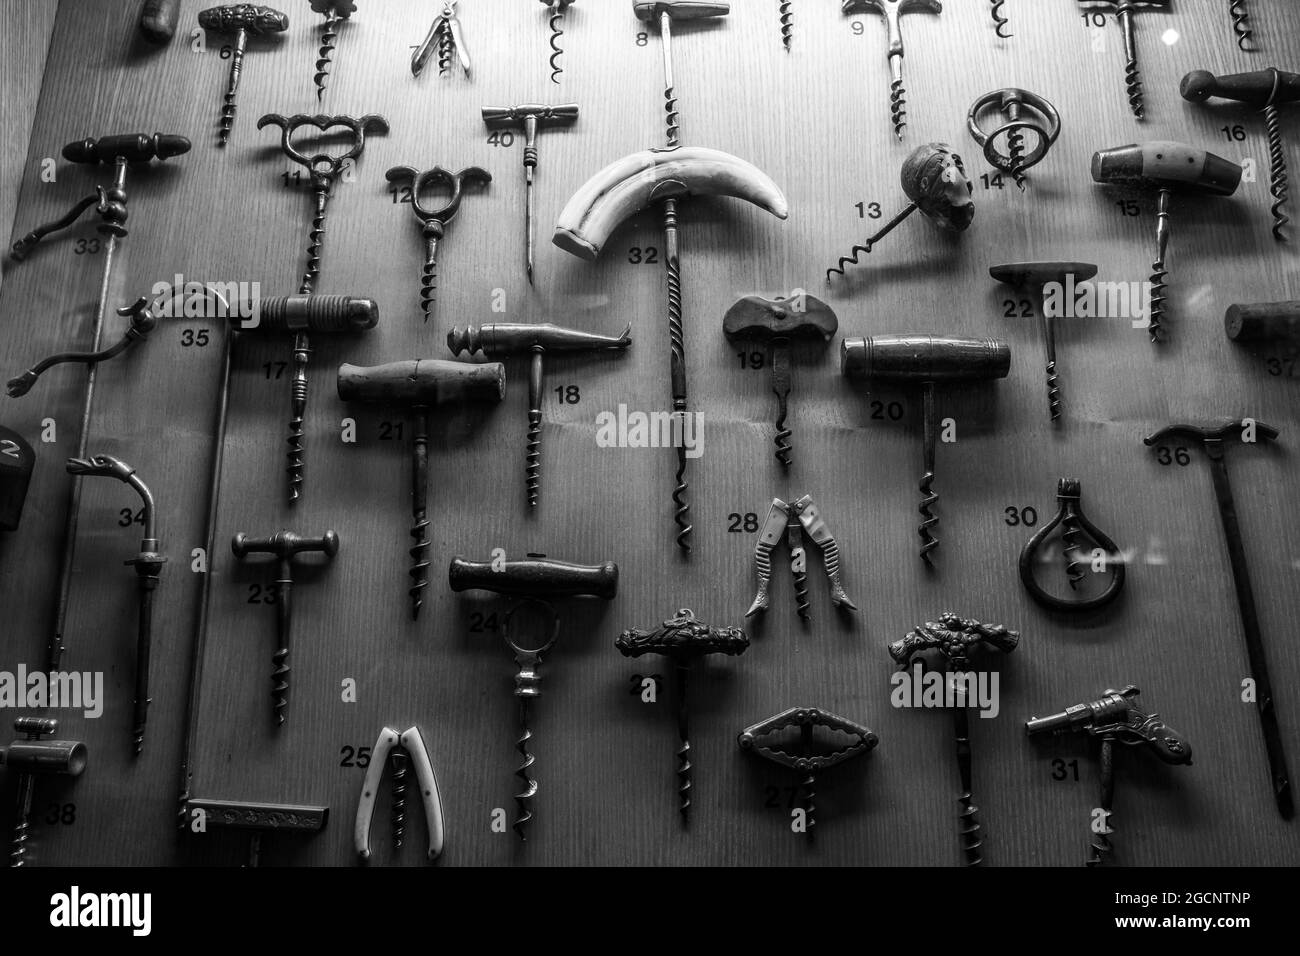 PARIS, FRANCE - Aug 06, 2021: Old Wine bottle corkscrews in a museum. Antique objects. Stock Photo